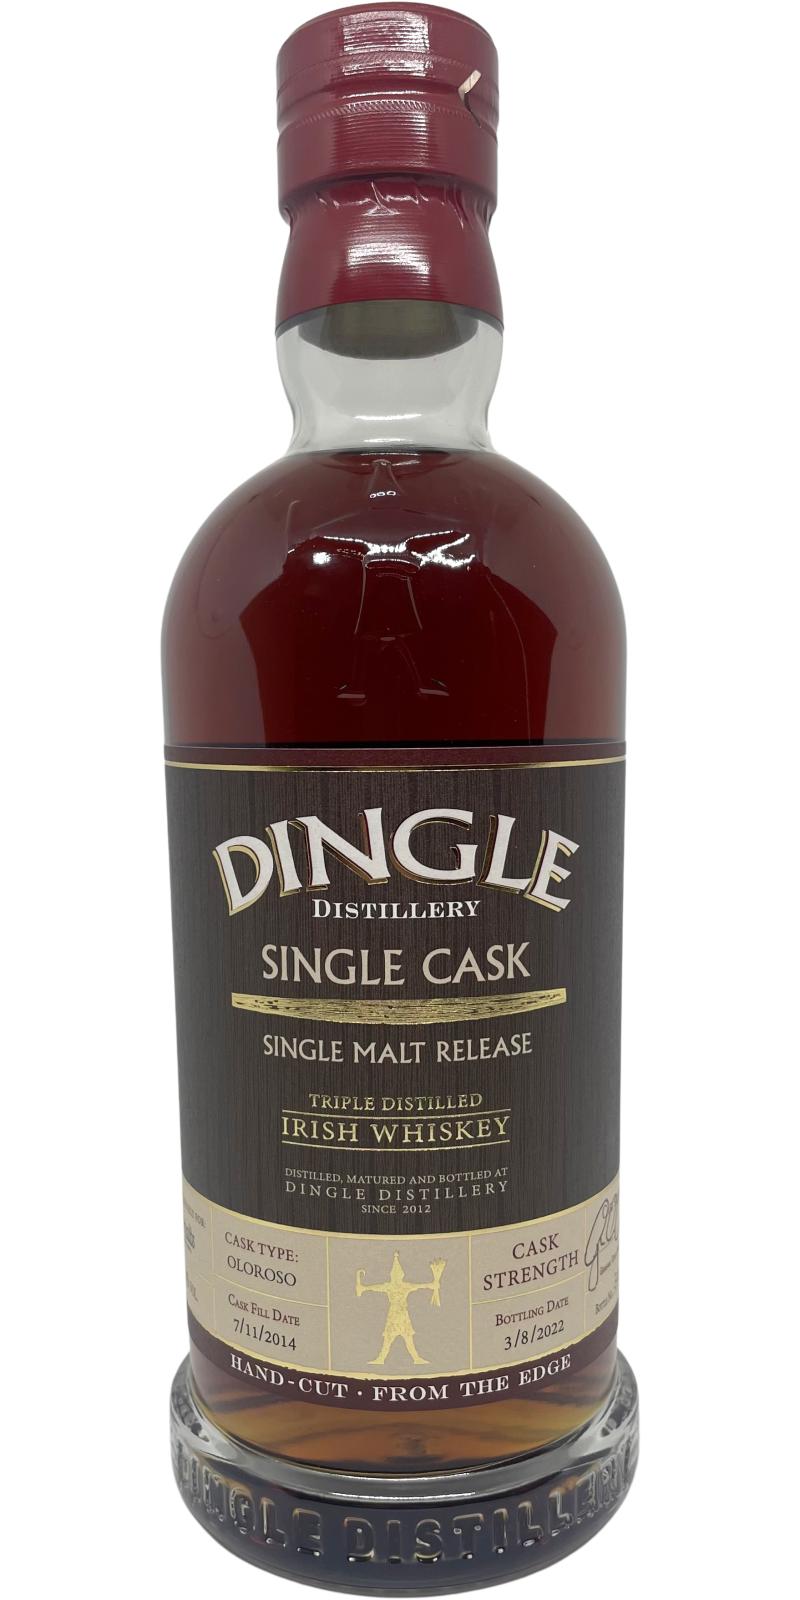 Dingle Single Cask Single Malt Release Oloroso Irishmalts 59.3% 700ml